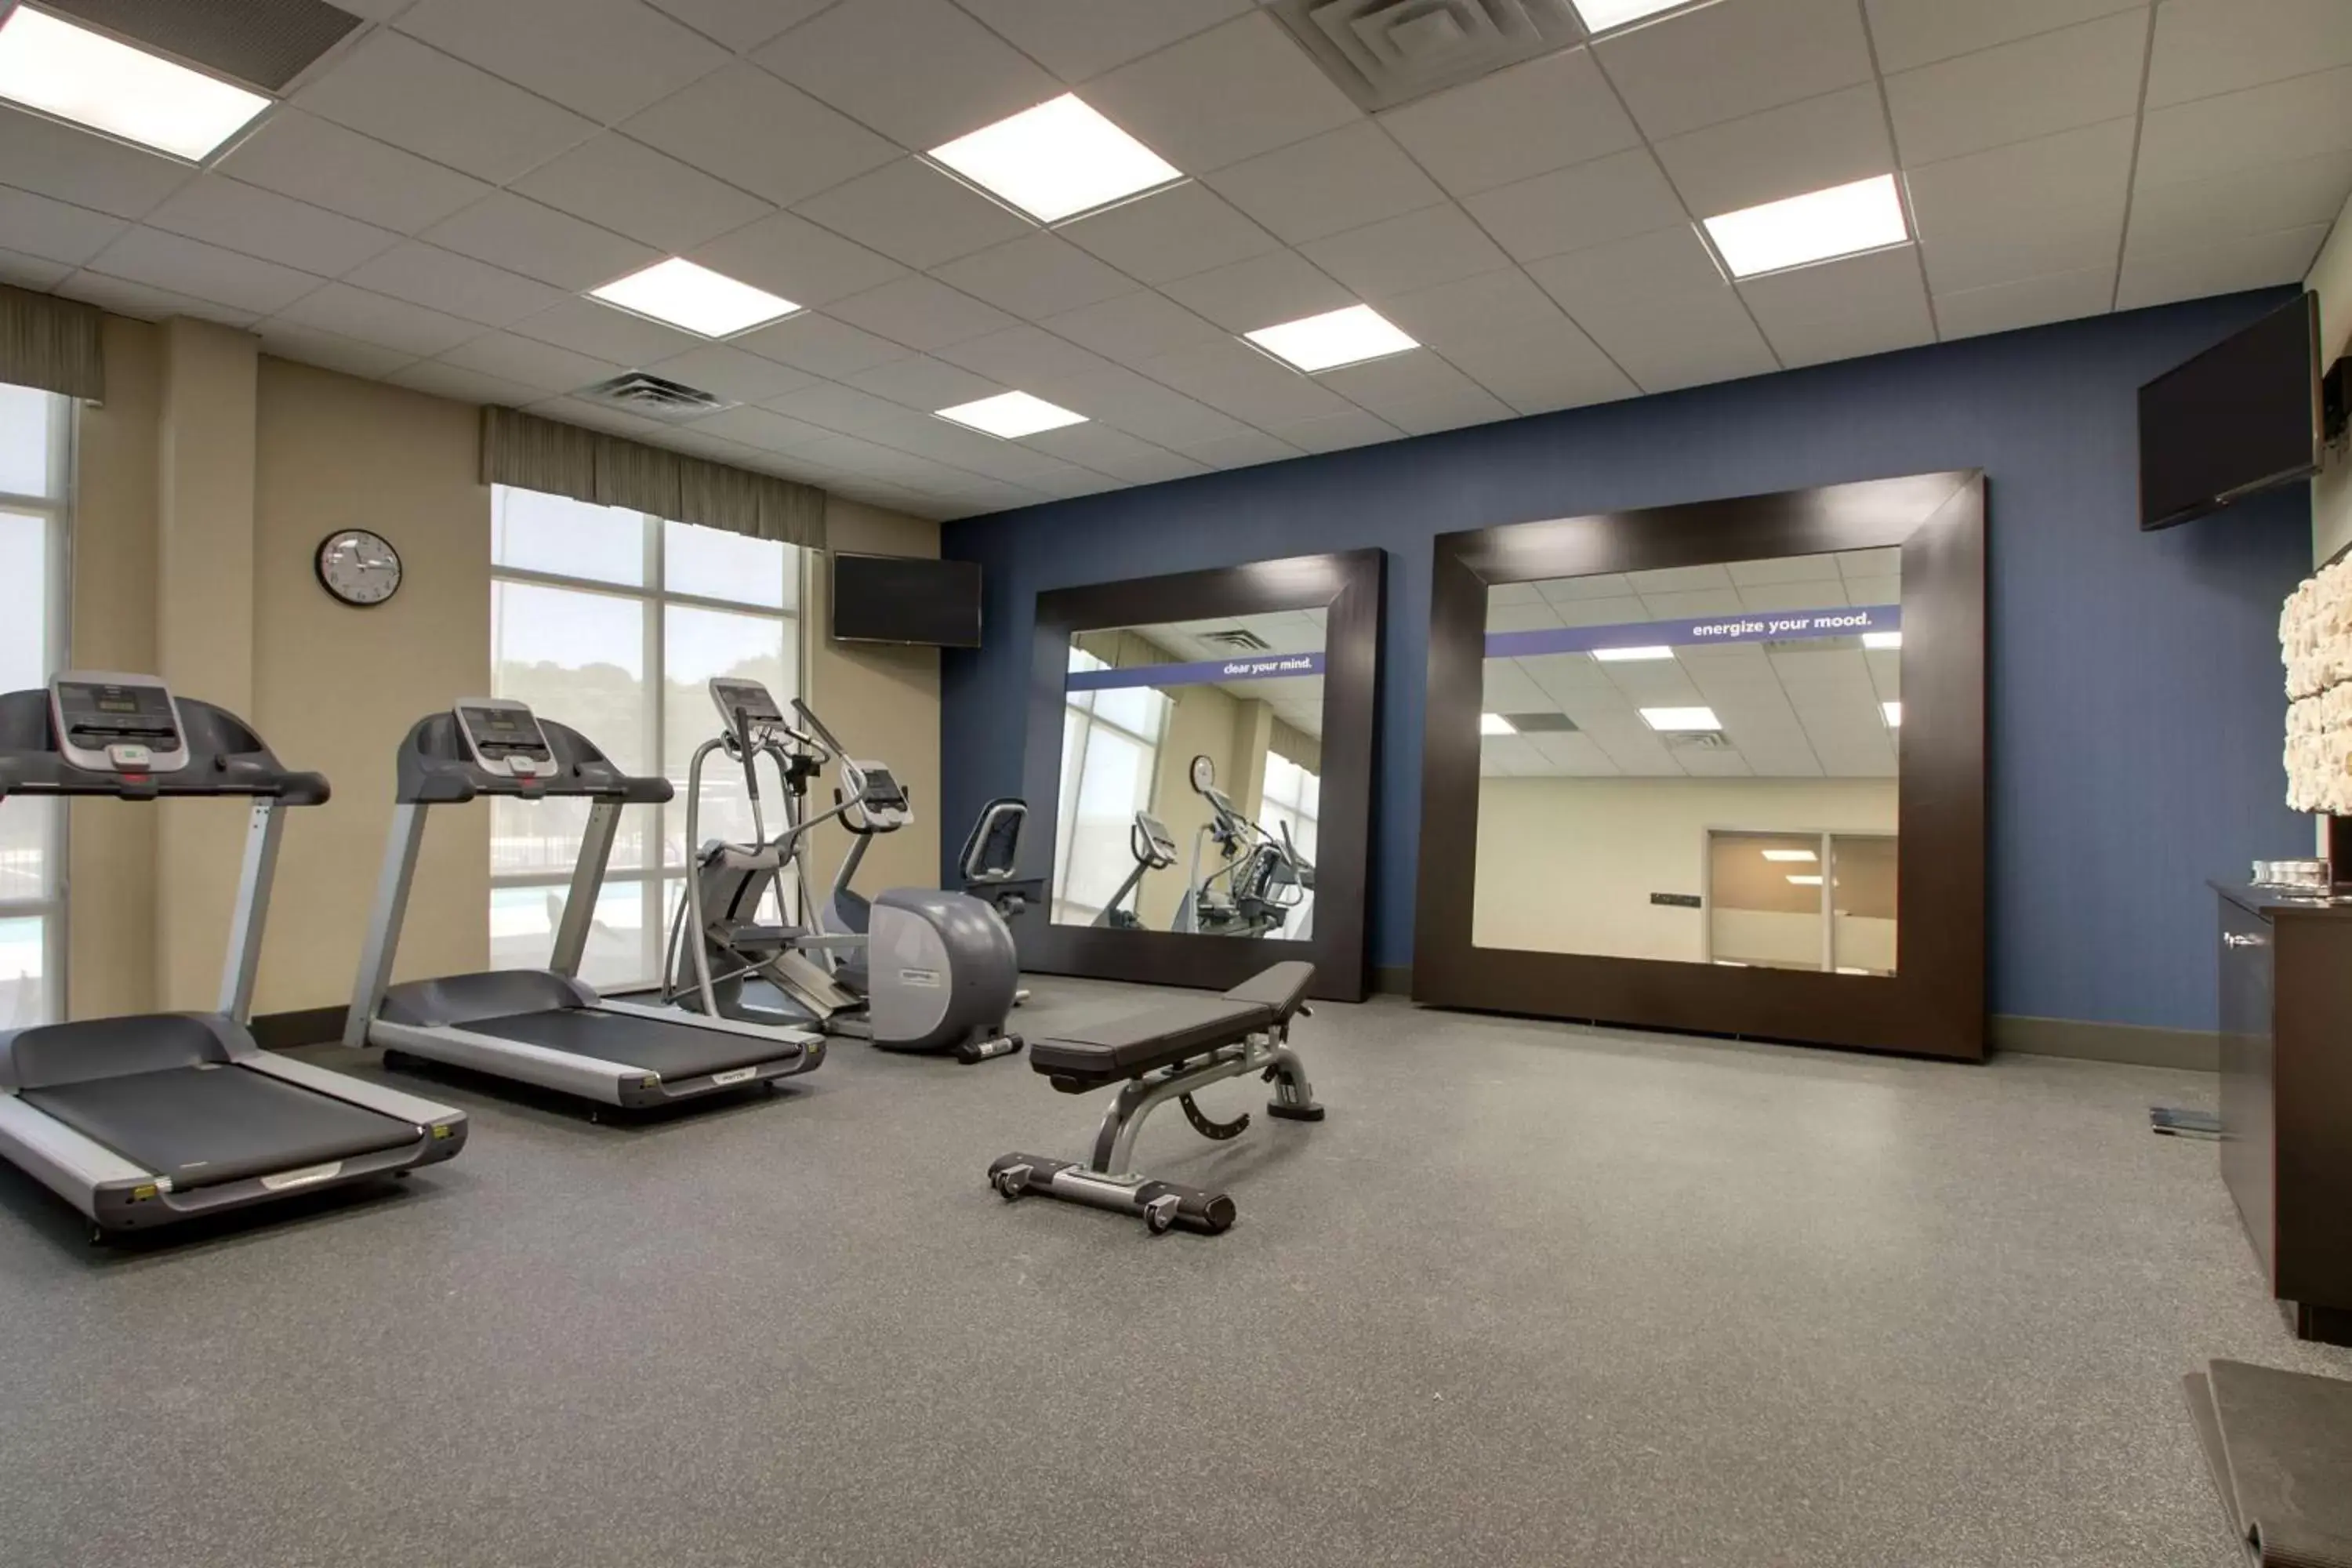 Fitness centre/facilities, Fitness Center/Facilities in Hampton Inn Sneads Ferry Topsail Beach